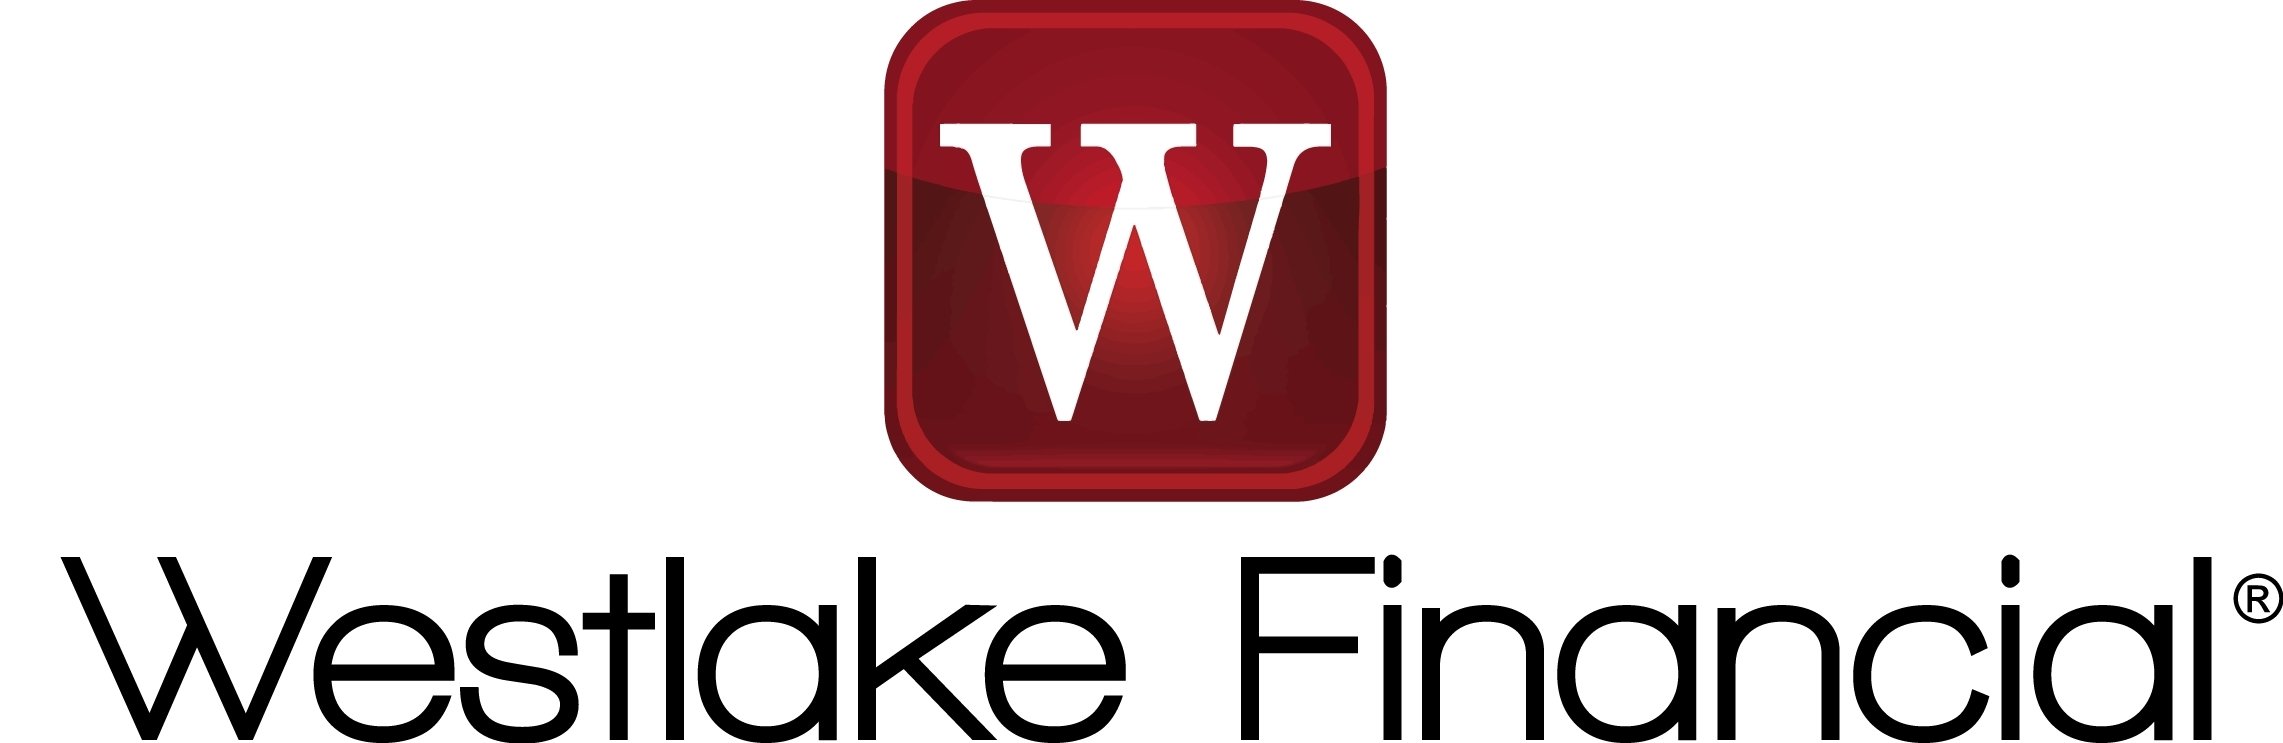 Westlake Financial